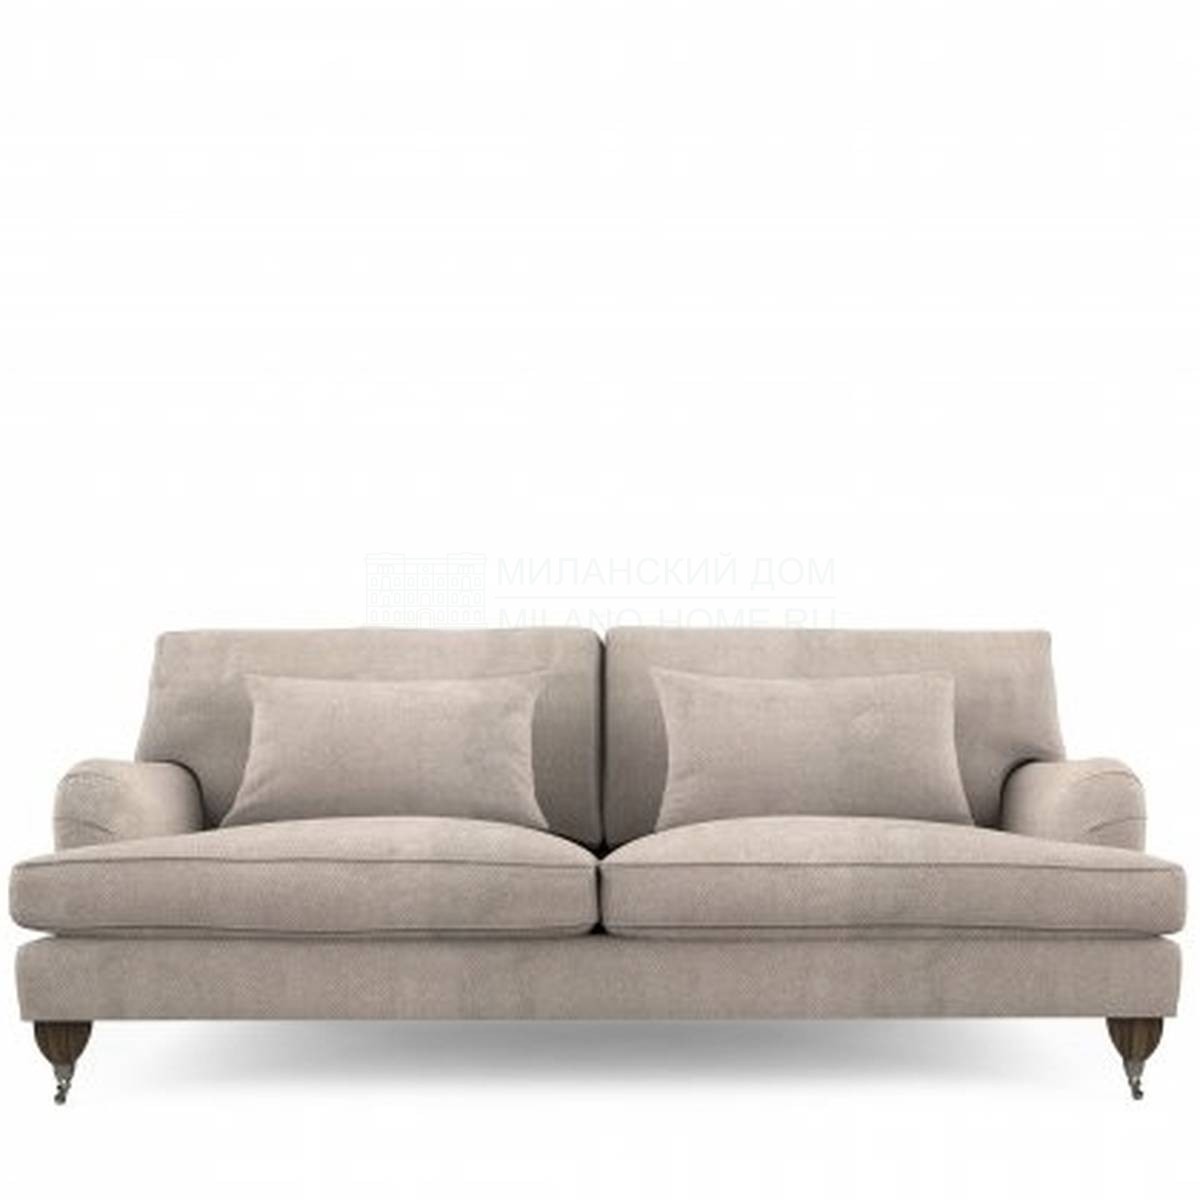 Прямой диван Daisy three seater sofa из Италии фабрики MARIONI